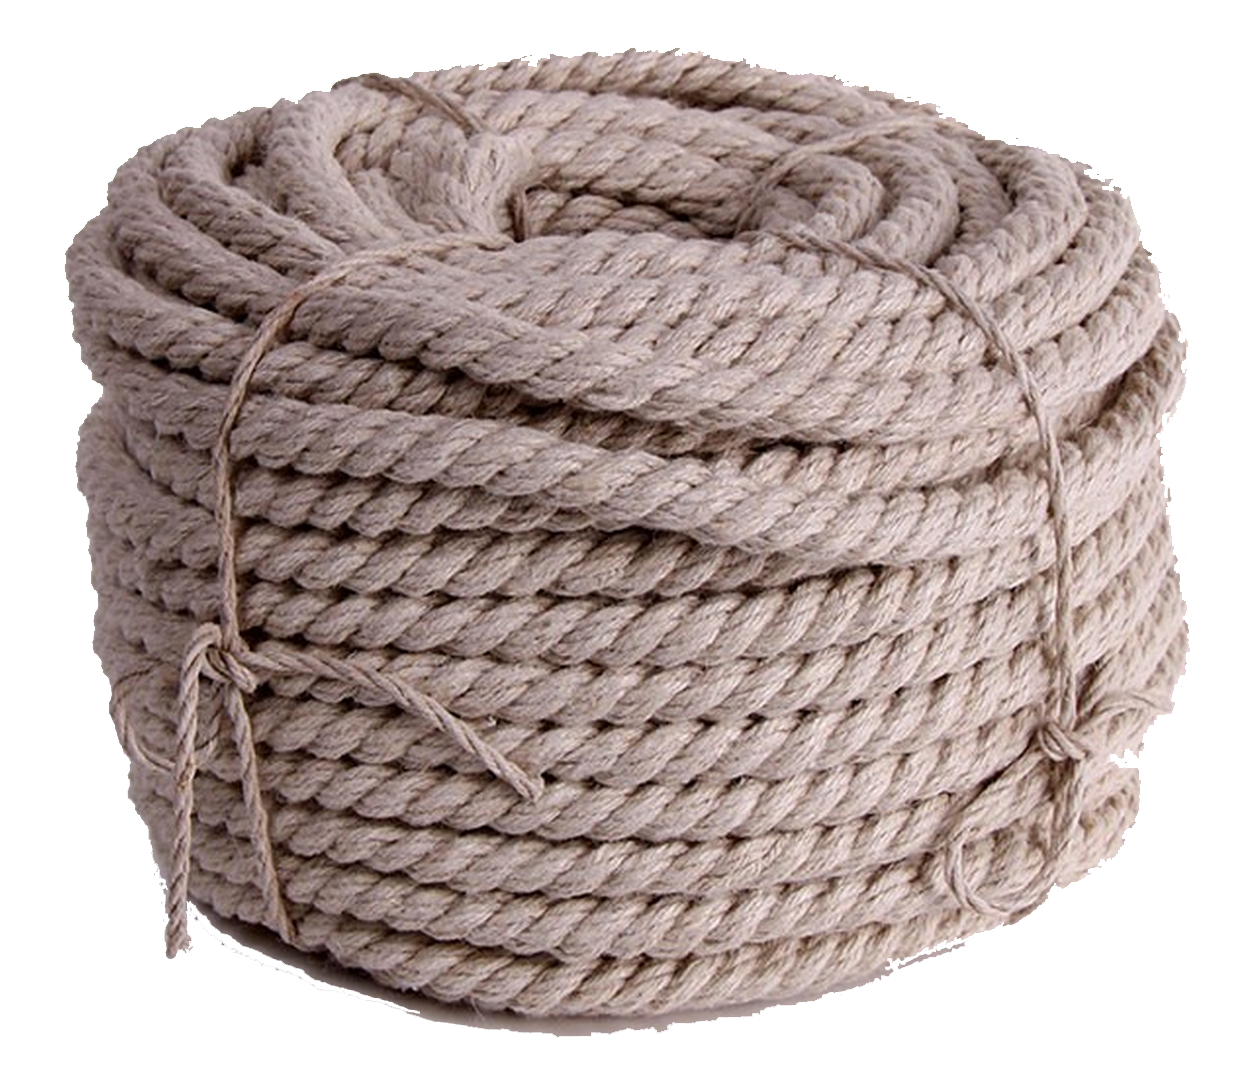 bulk hemp rope multiple sizes #17022